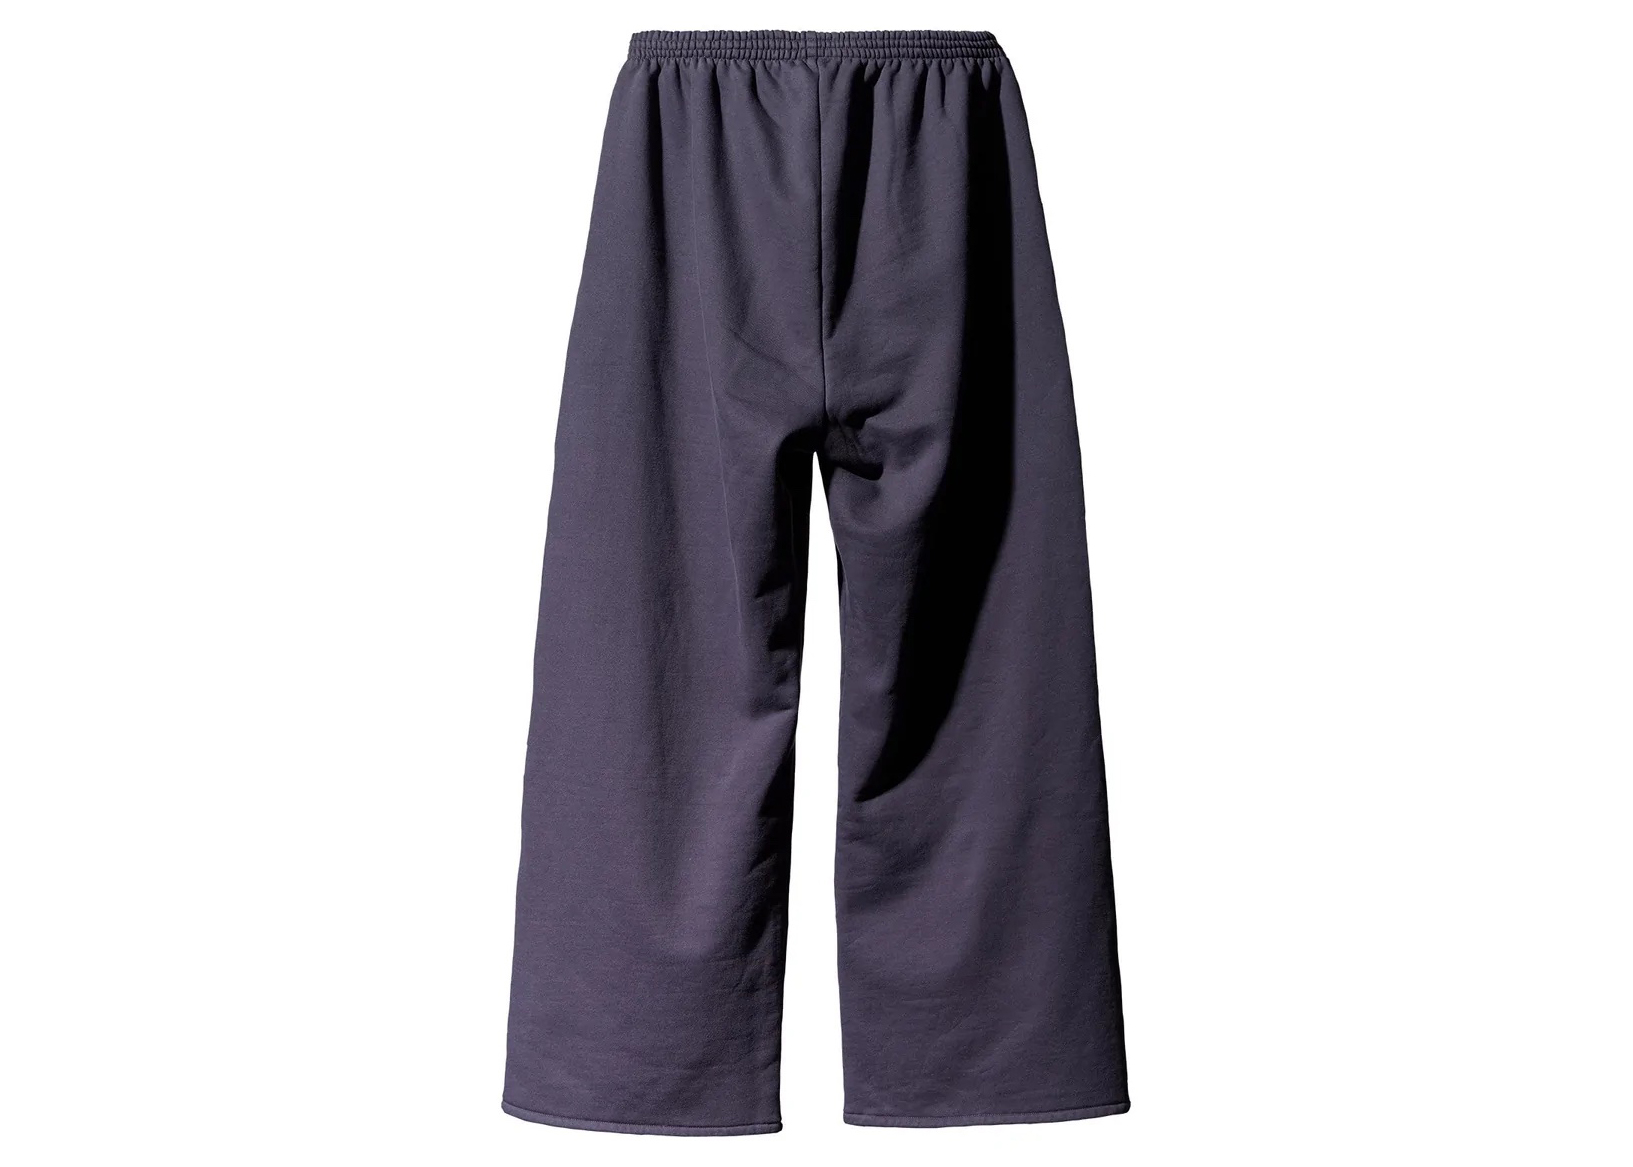 Yeezy Gap Fleece Sweatpant Black - FW22 - US